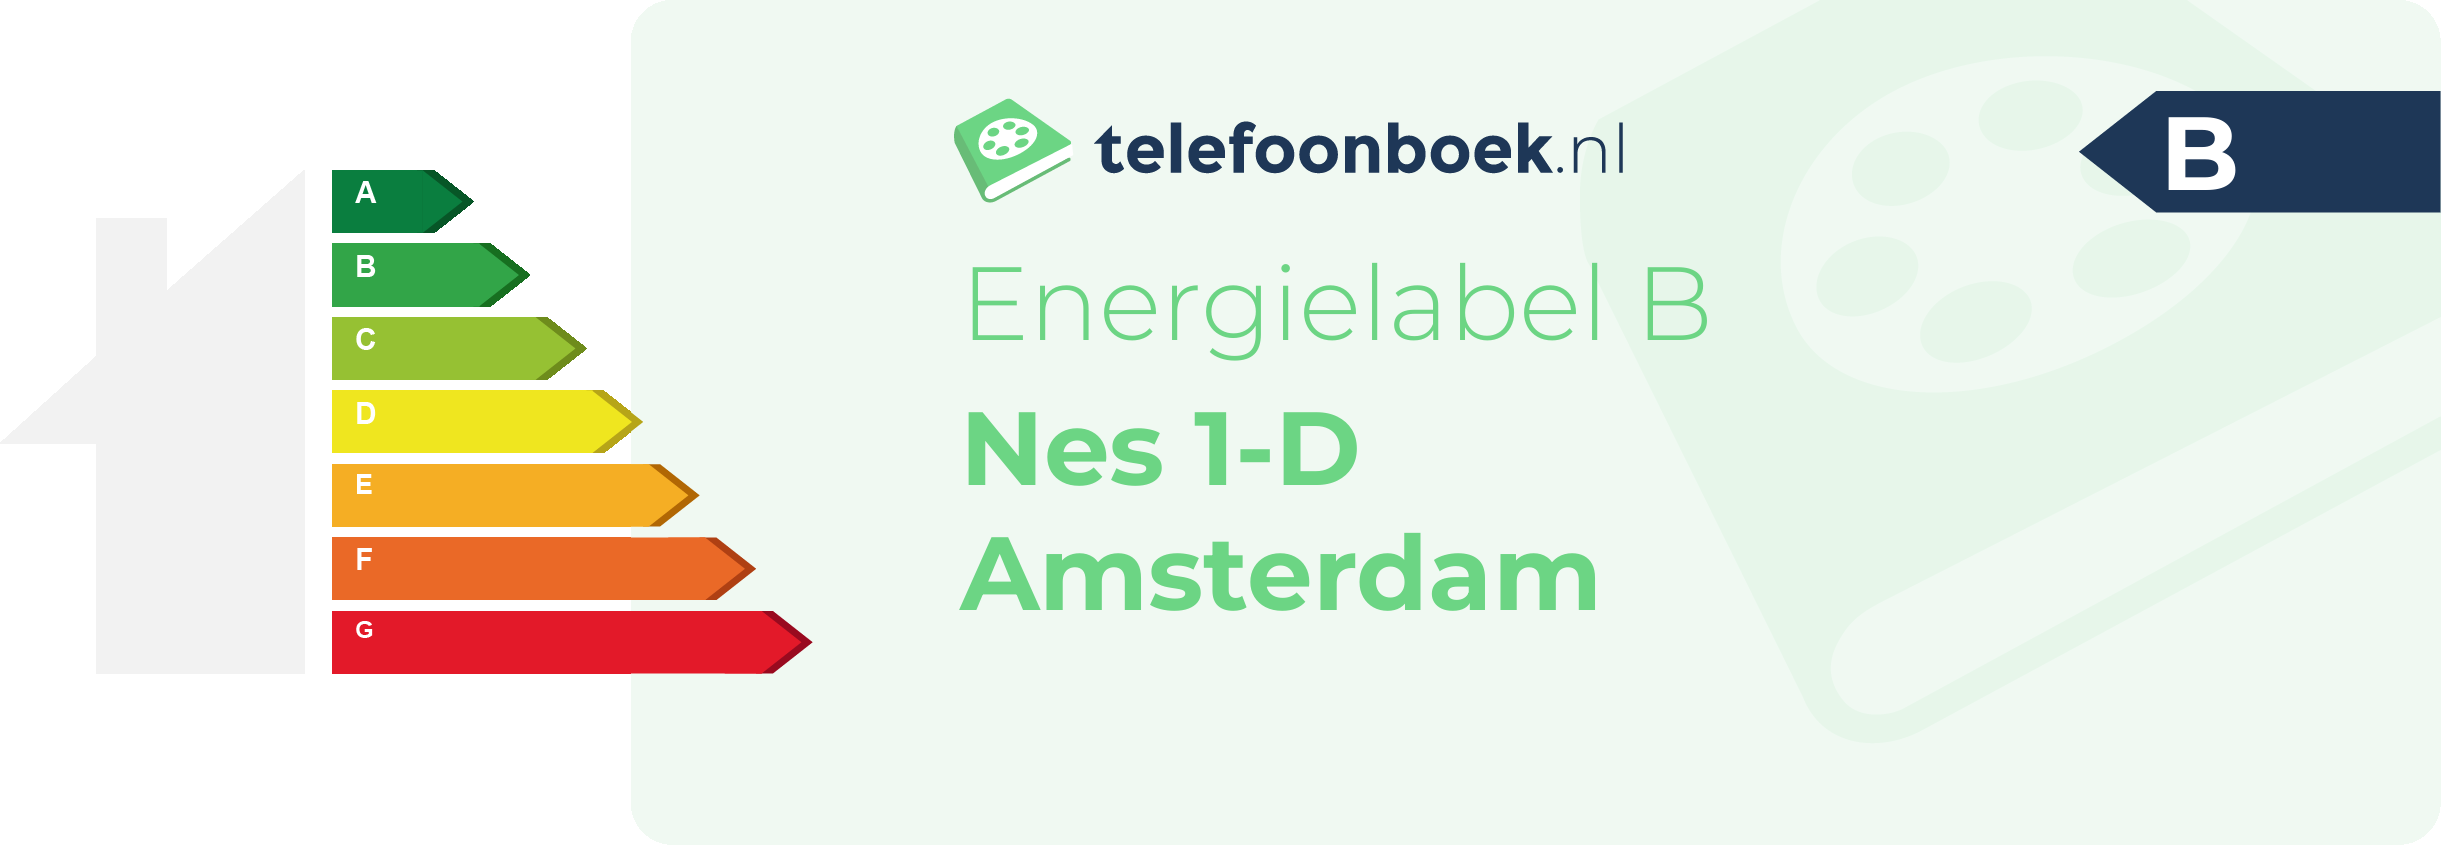 Energielabel Nes 1-D Amsterdam